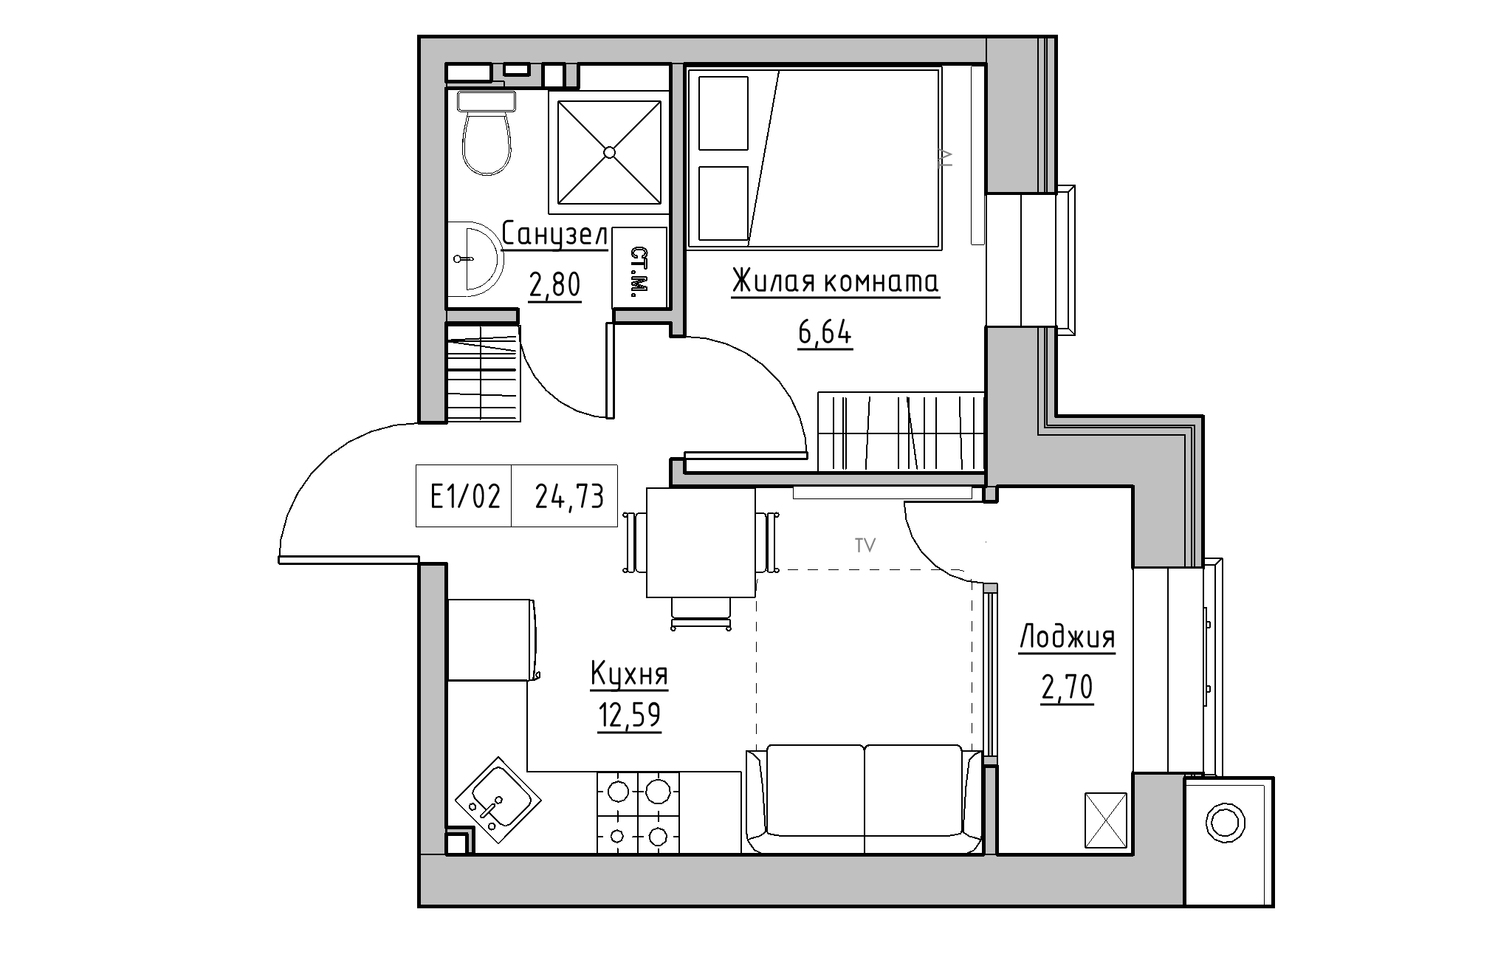 Planning 1-rm flats area 24.73m2, KS-013-03/0001.